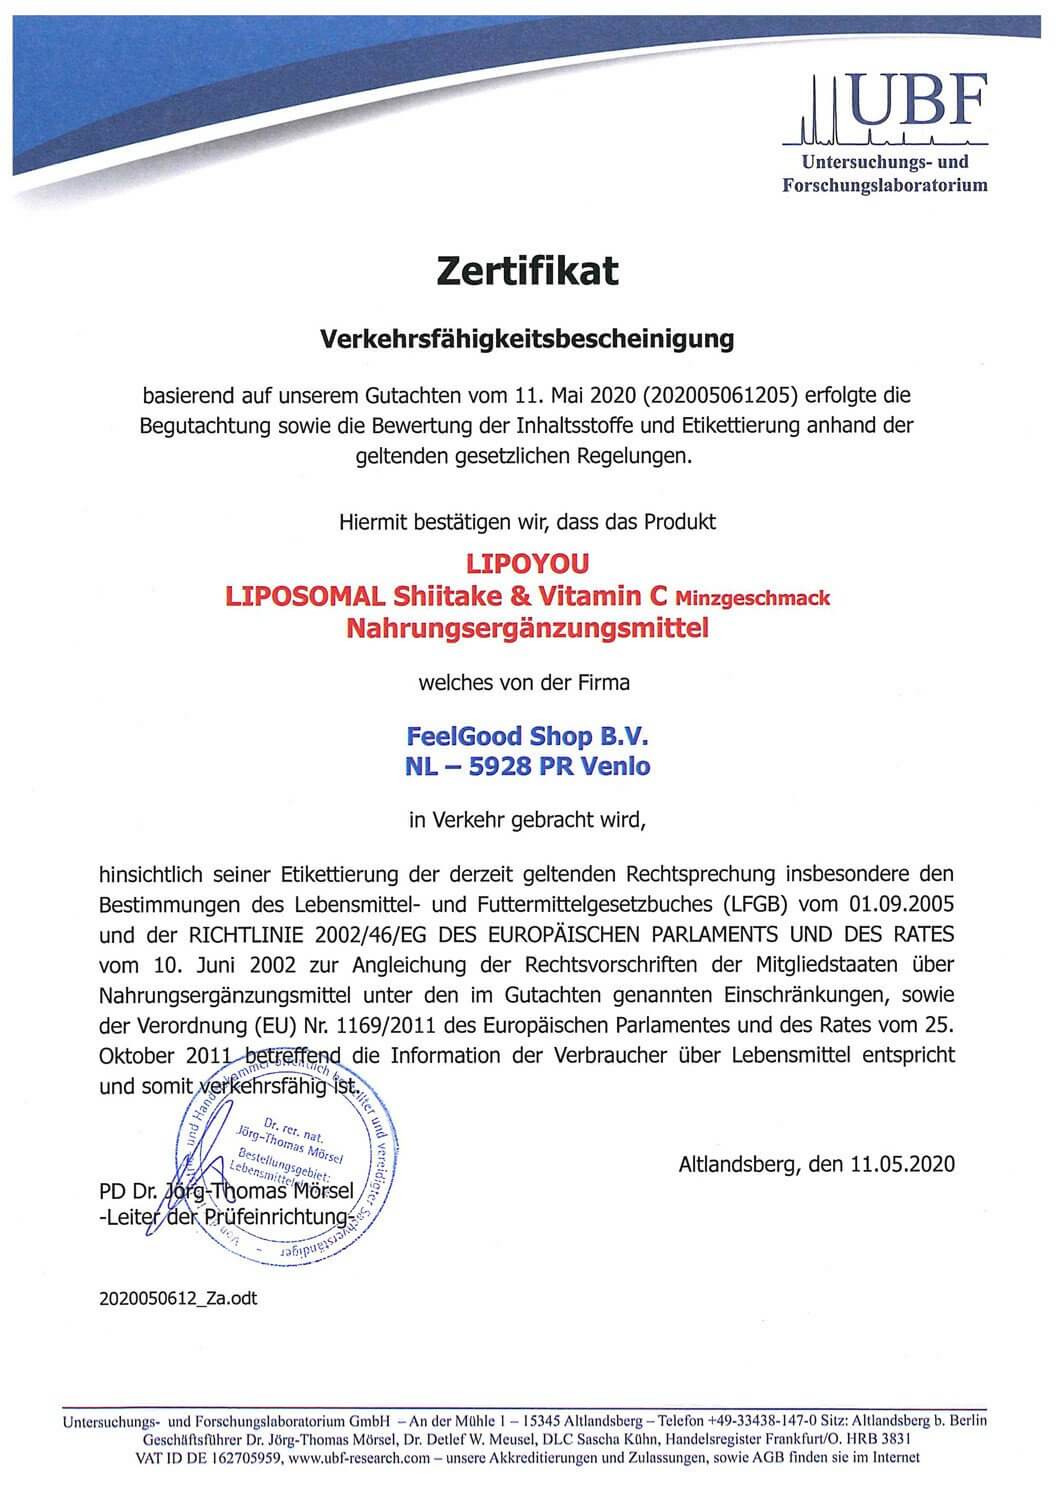 LIPOSOMAL Shiitake & Vitamin C Zertifikat